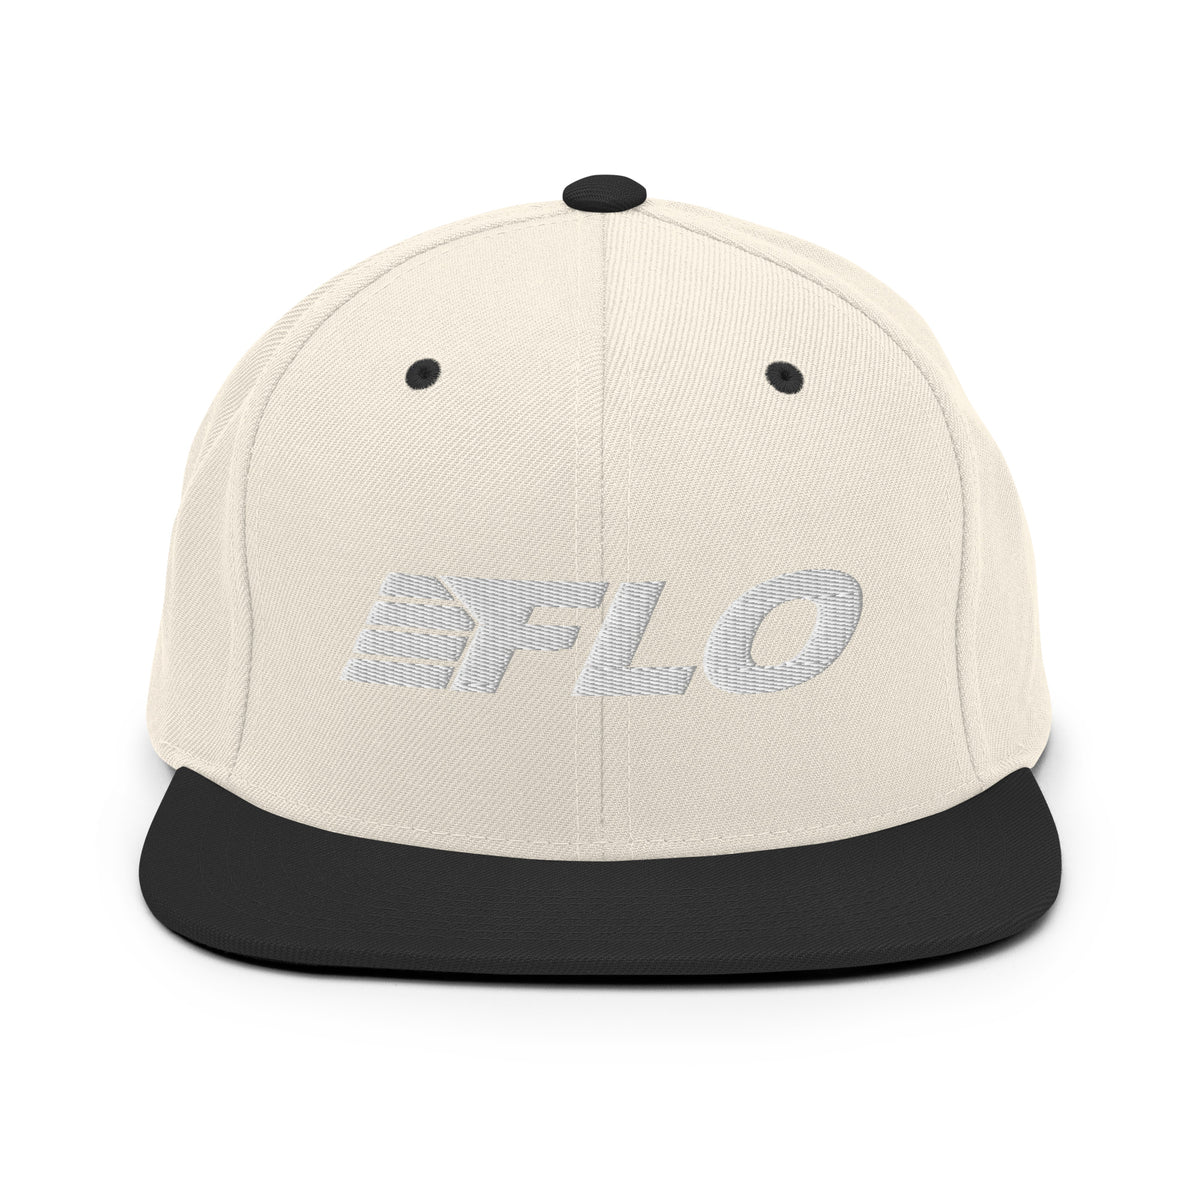 FLO Logo Hat